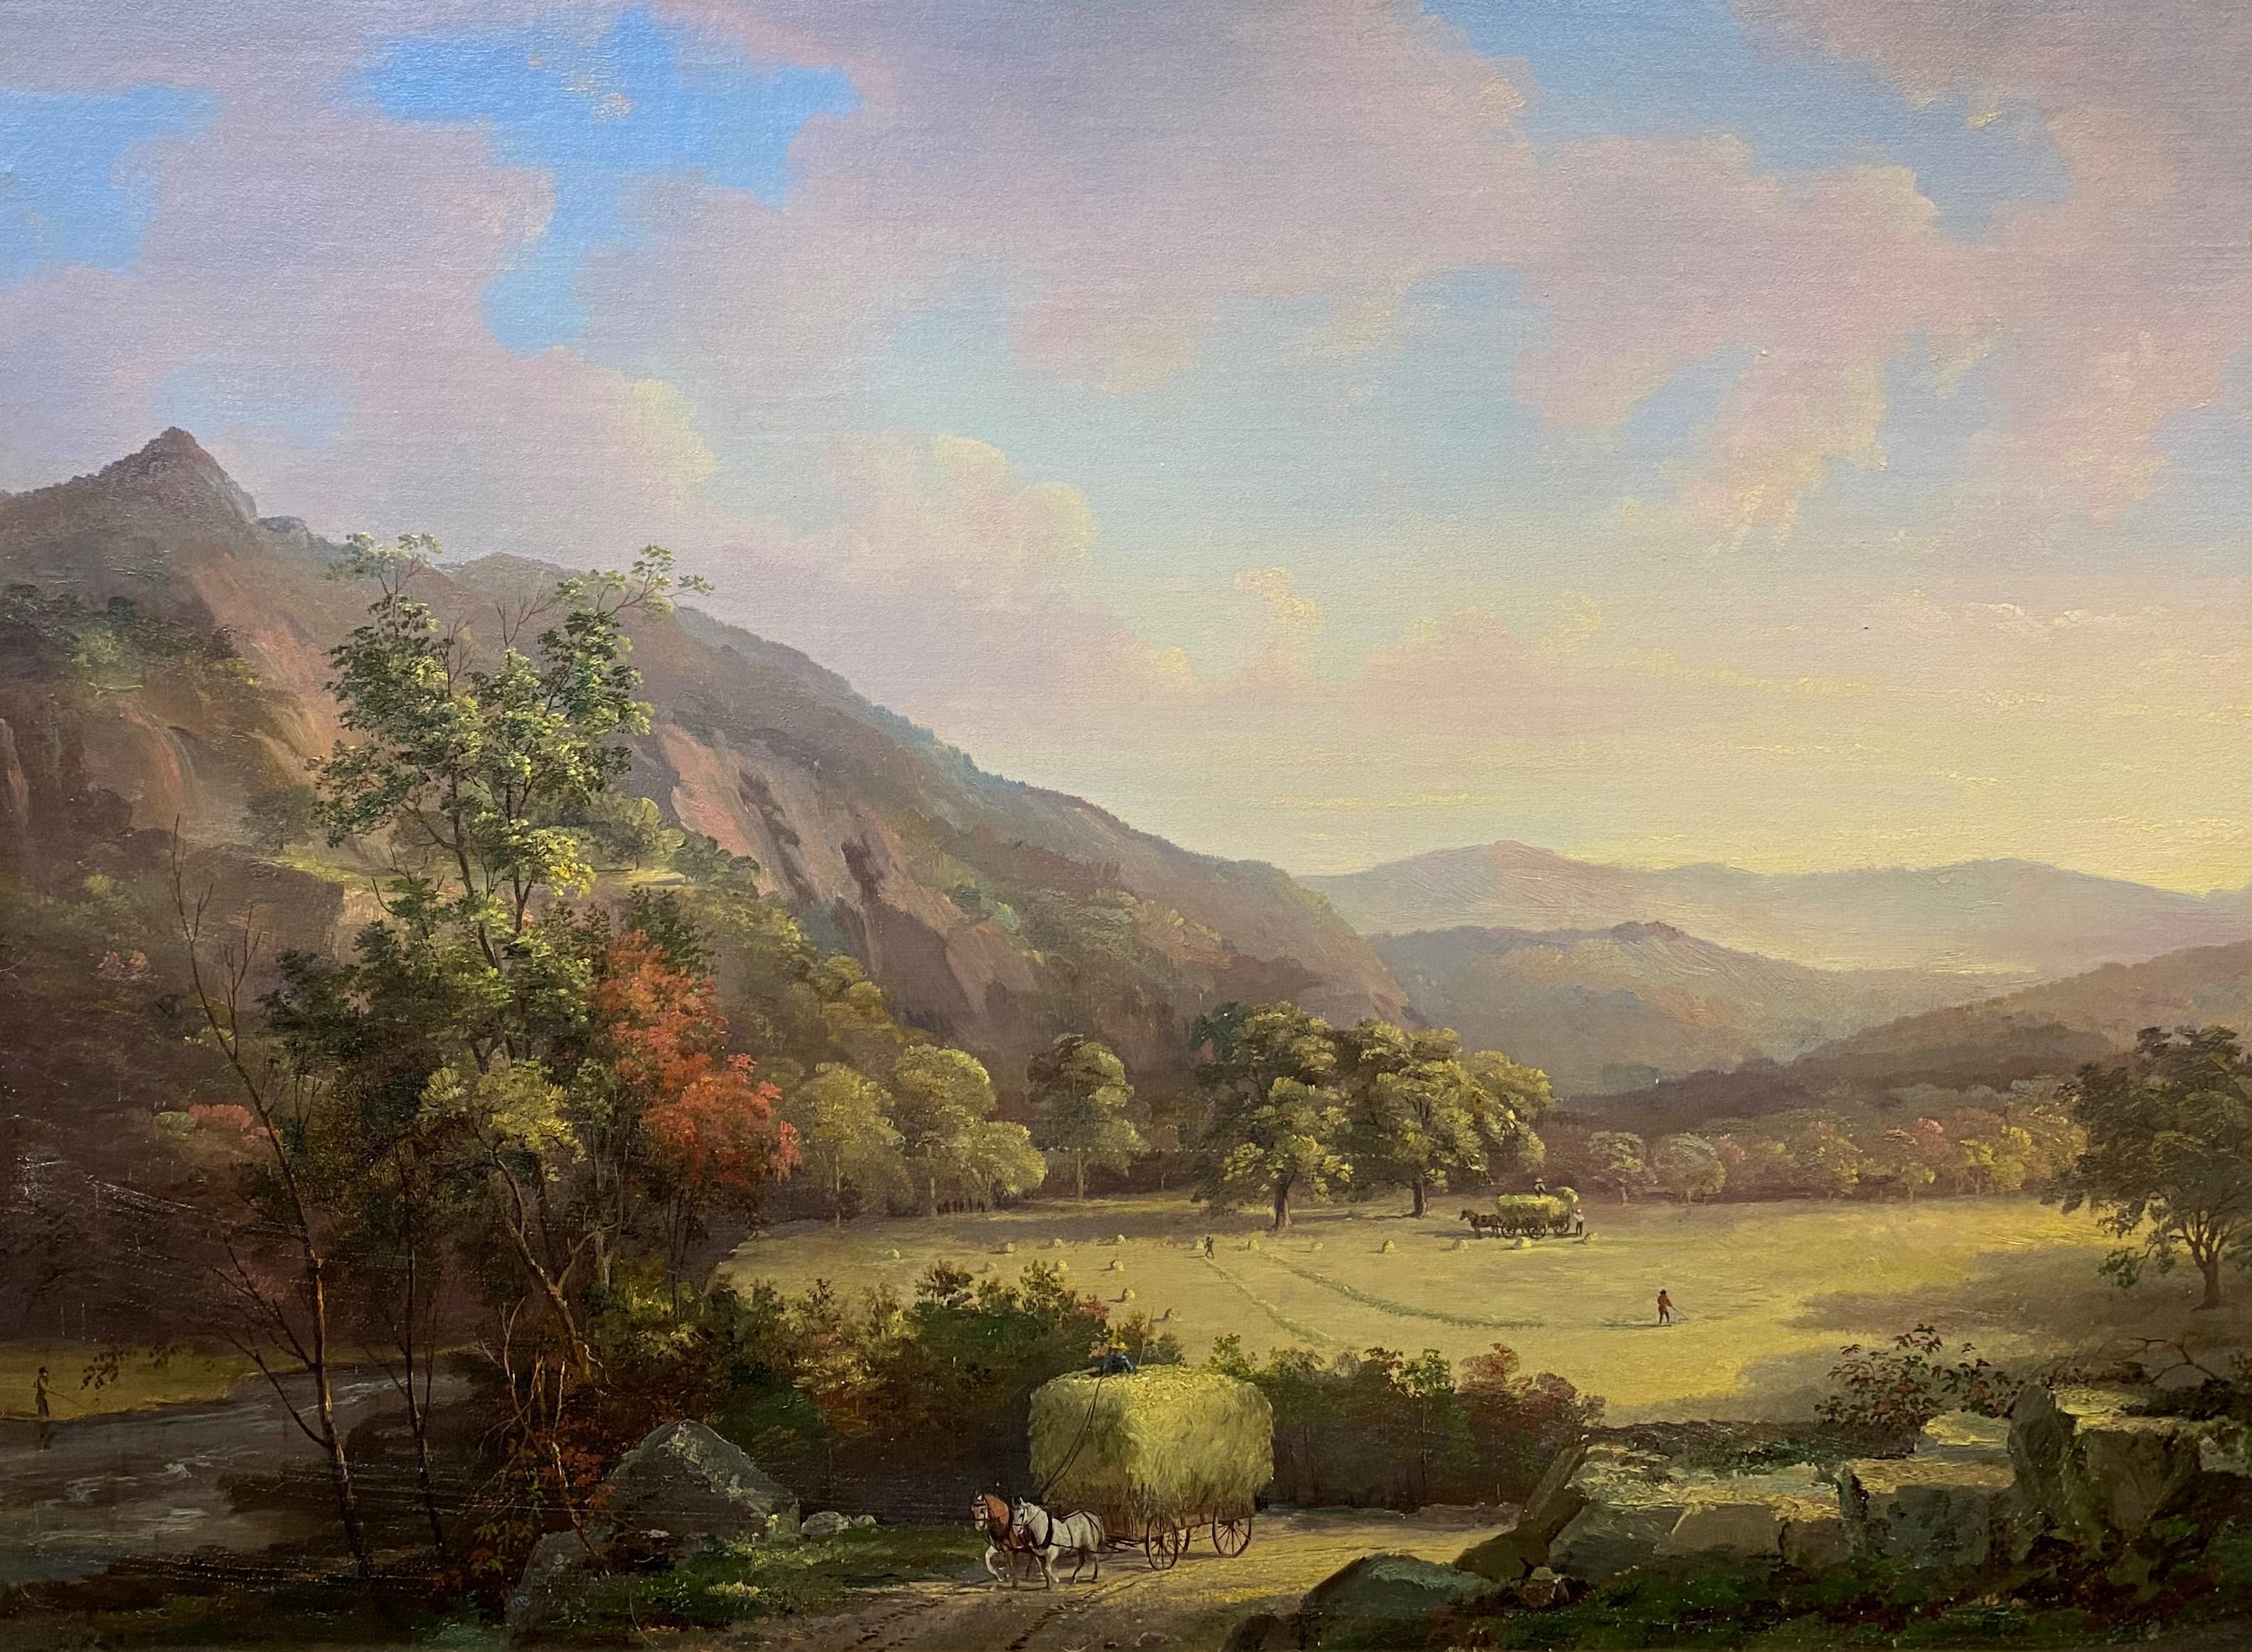 Haying near Mount Chocorua - Painting by John White Allen Scott